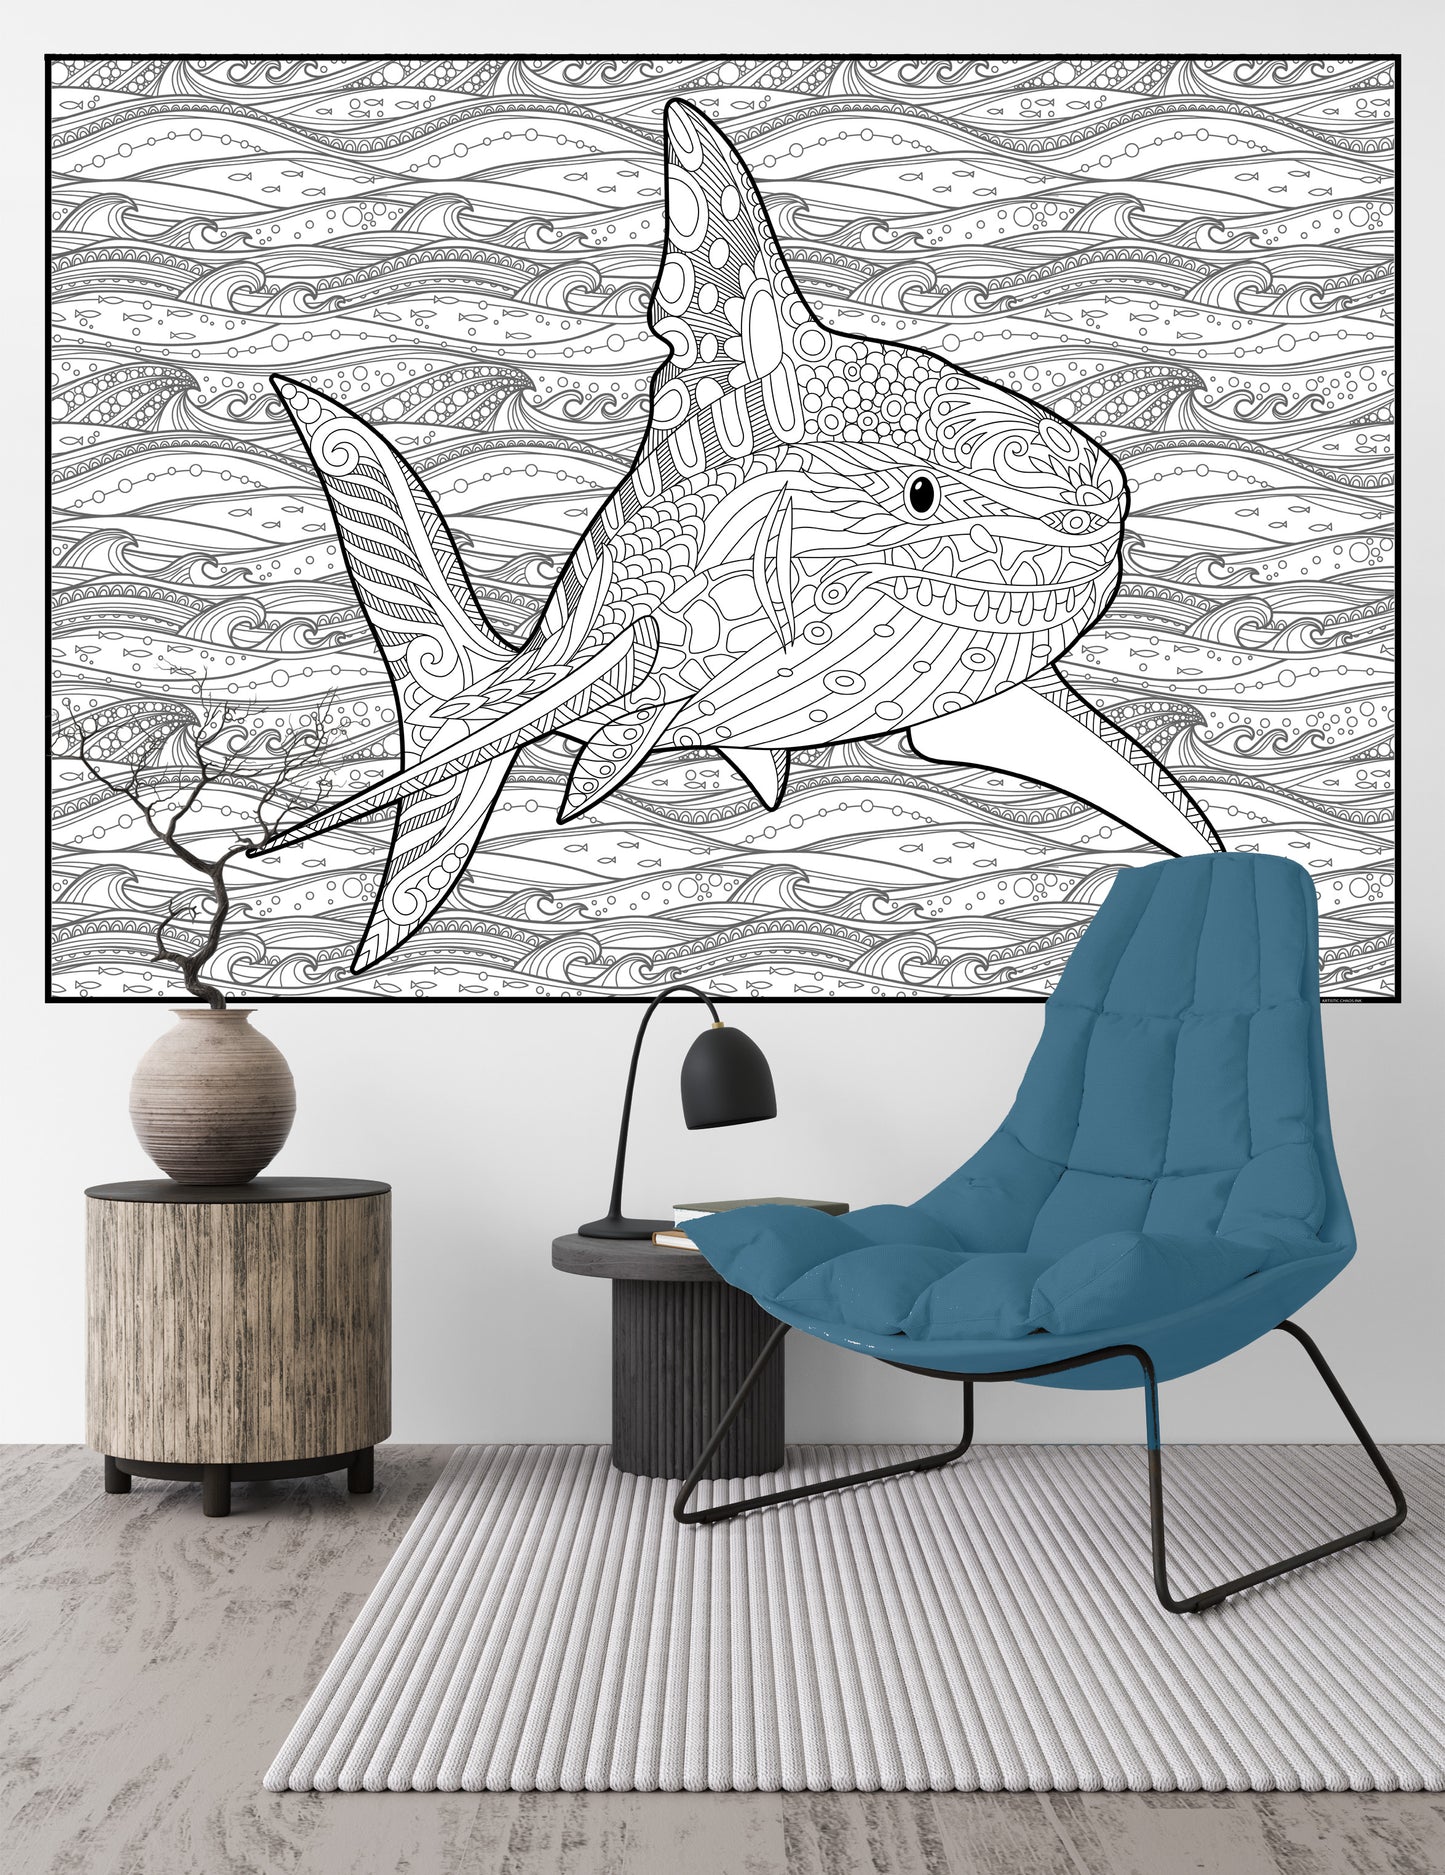 Premium Giant Shark Coloring Poster